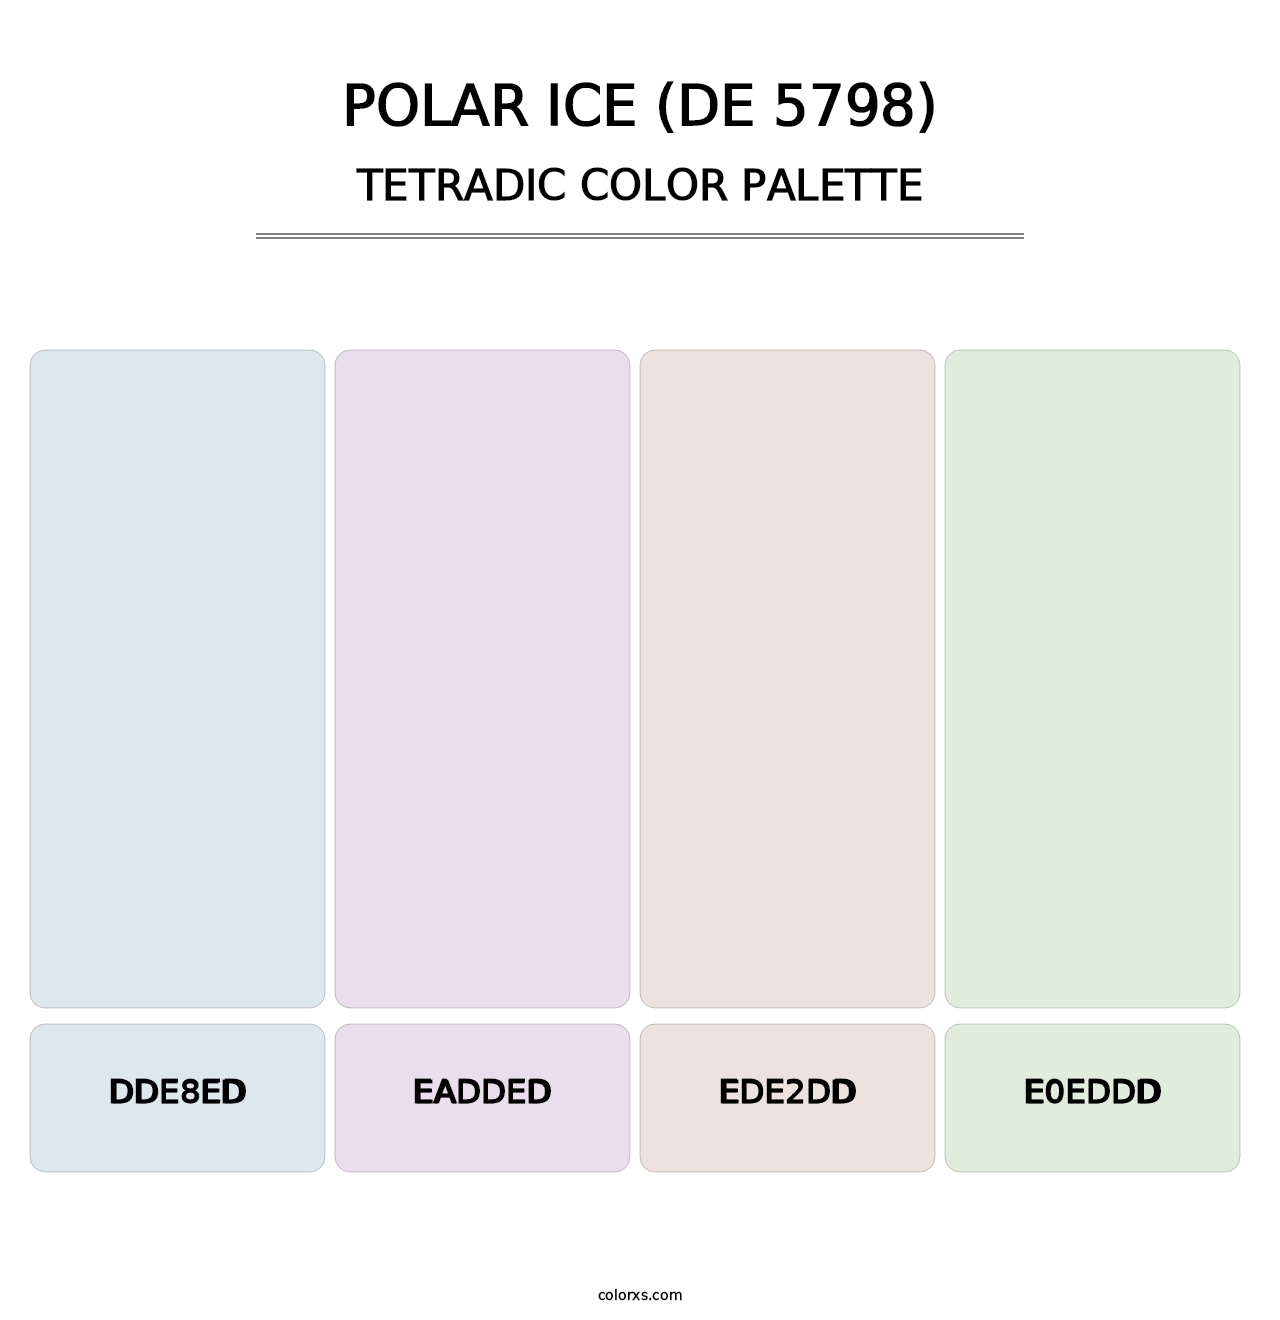 Polar Ice (DE 5798) - Tetradic Color Palette